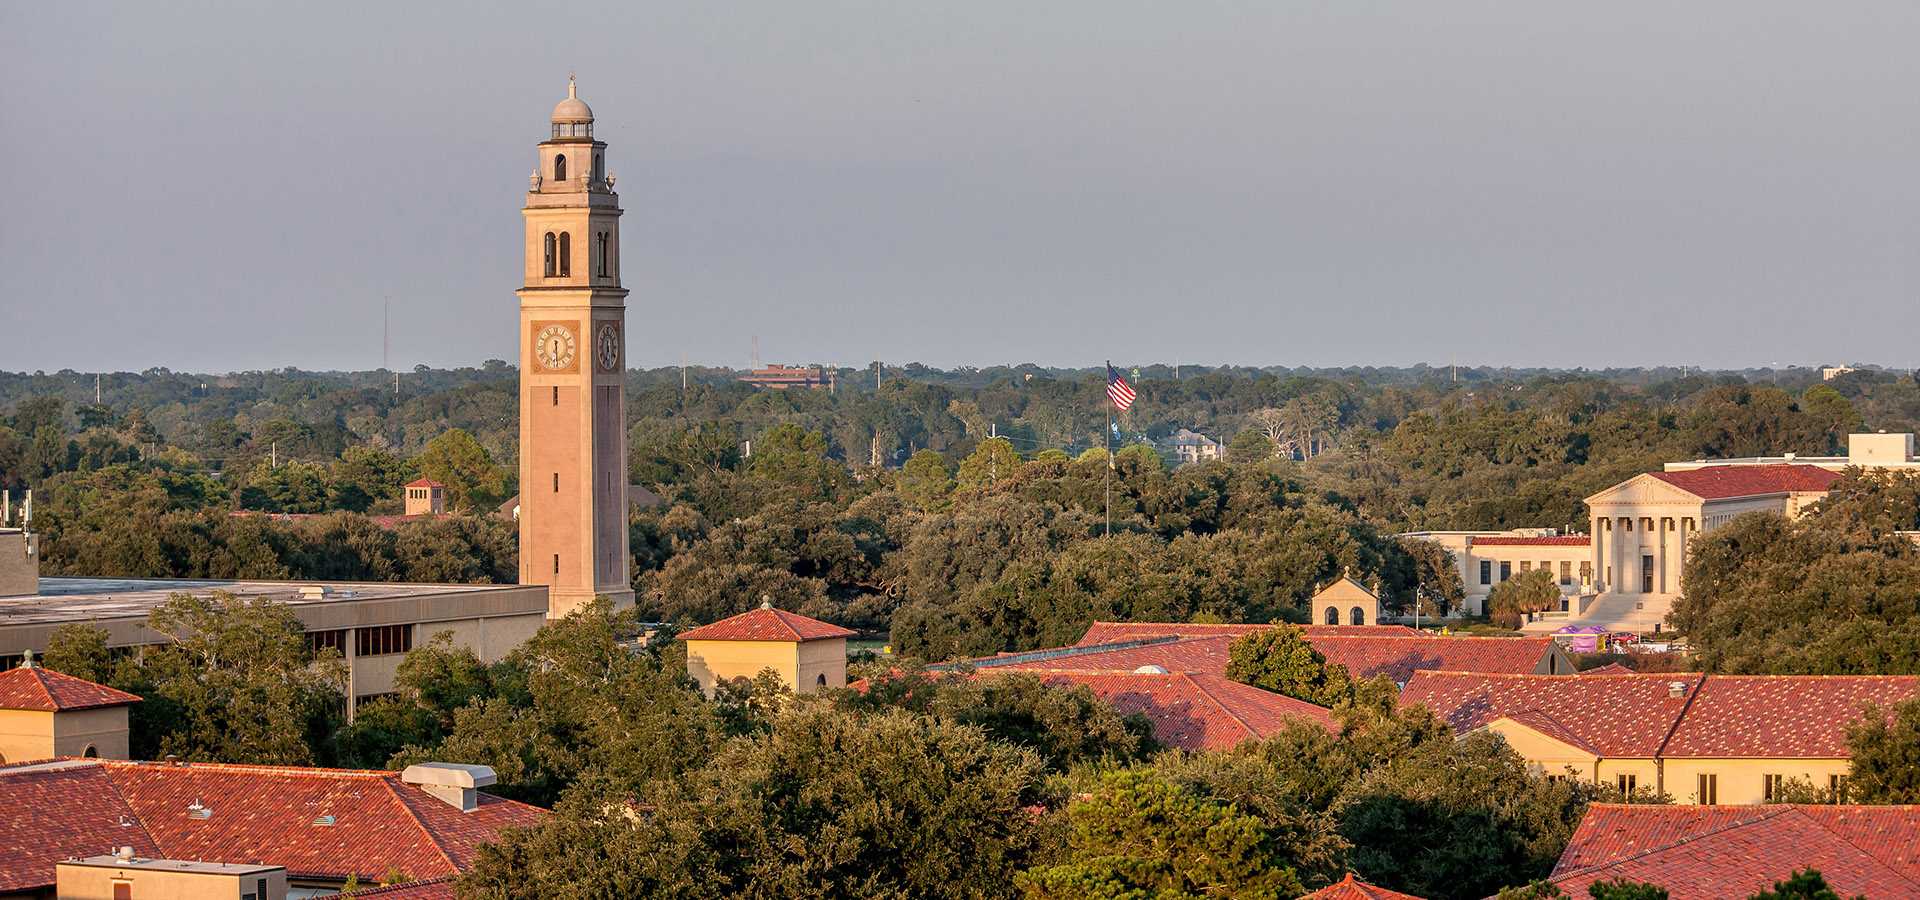 Louisiana State University (LSU) Memorial Tower at sundown